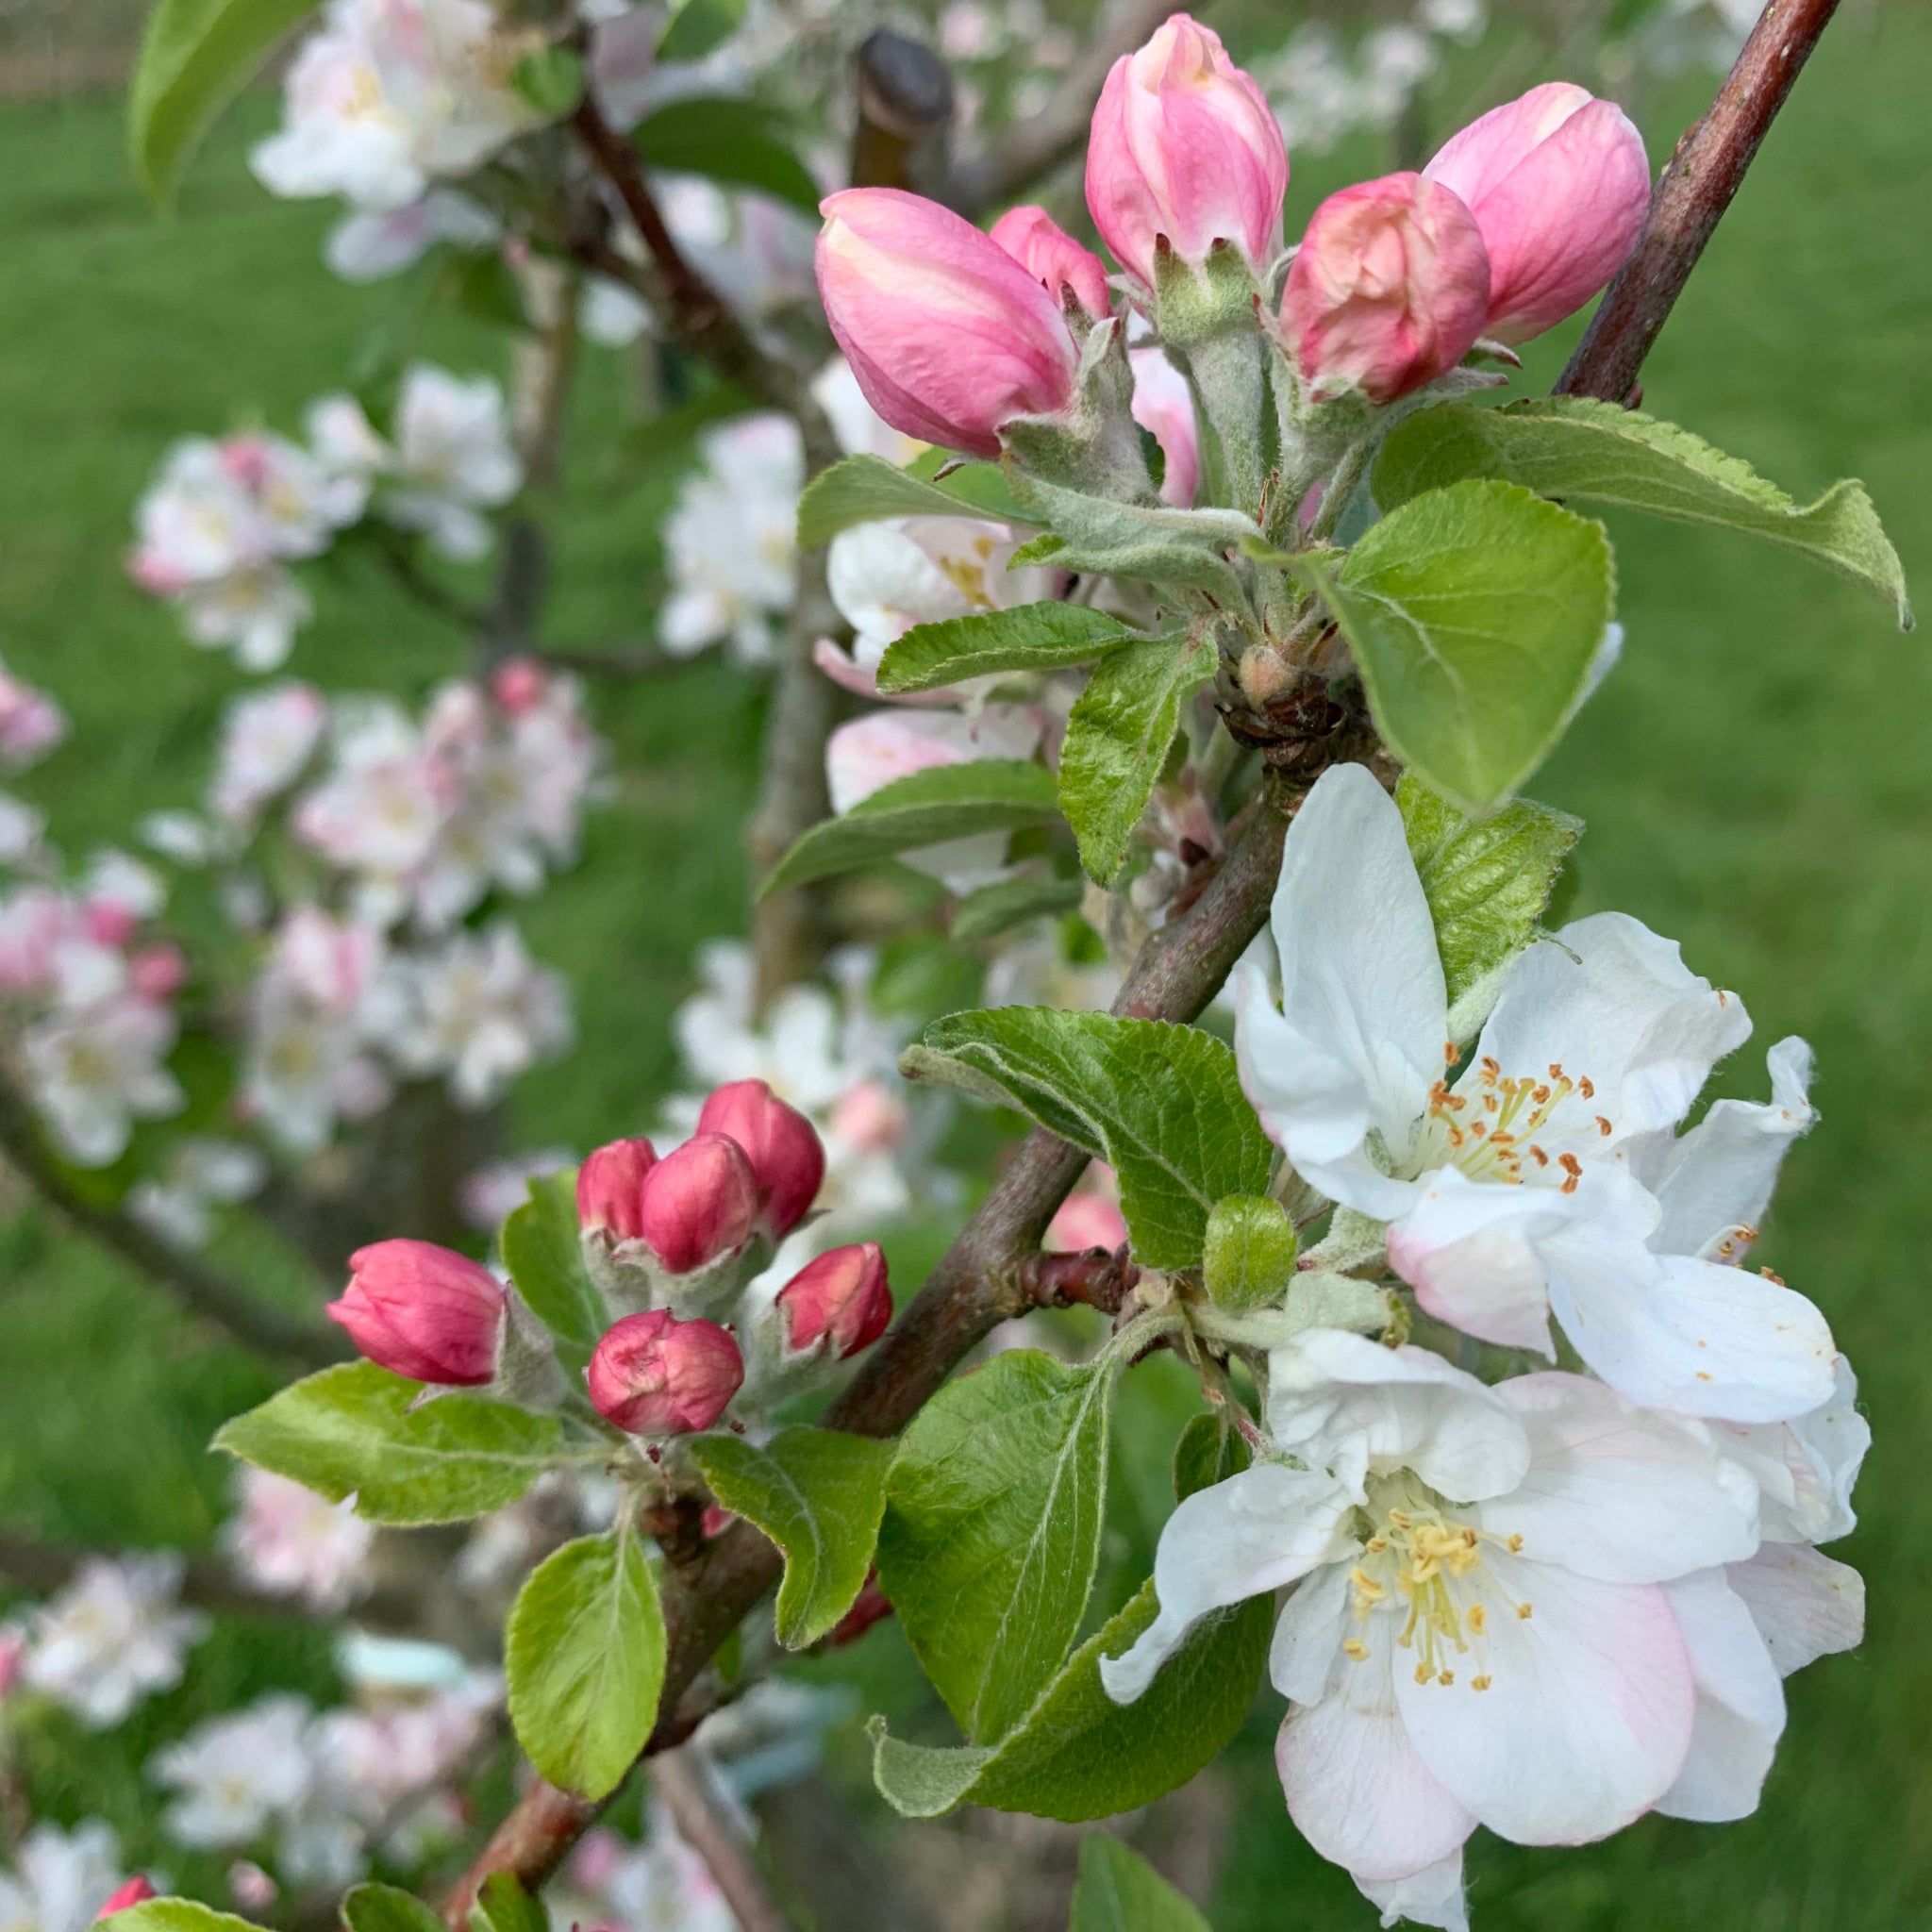 Kretchmer's Surprise apple tree blossom